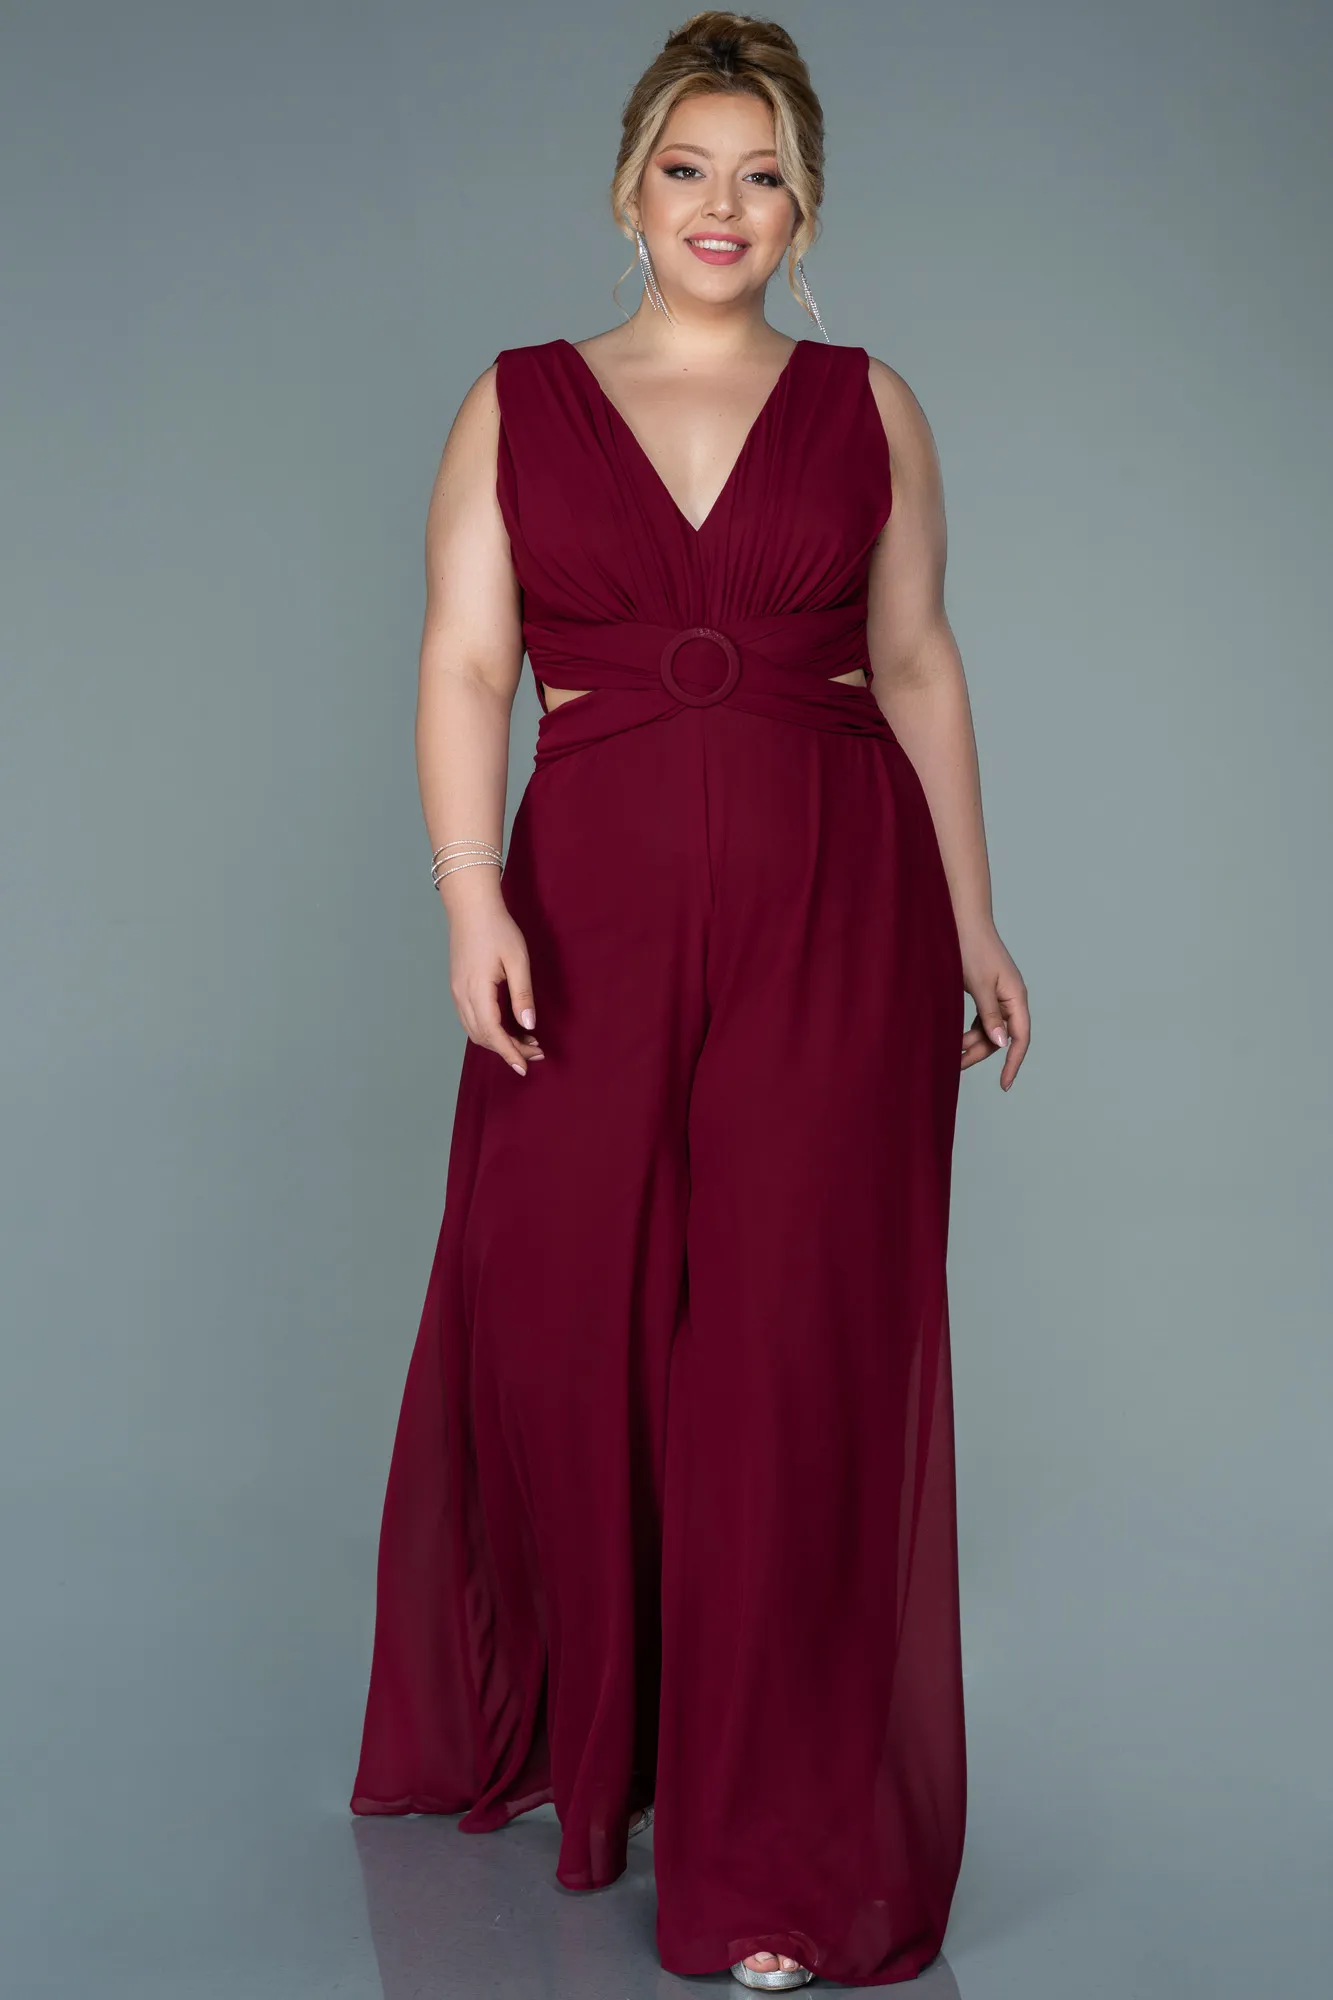 Burgundy-Chiffon Plus Size Evening Dress ABT082